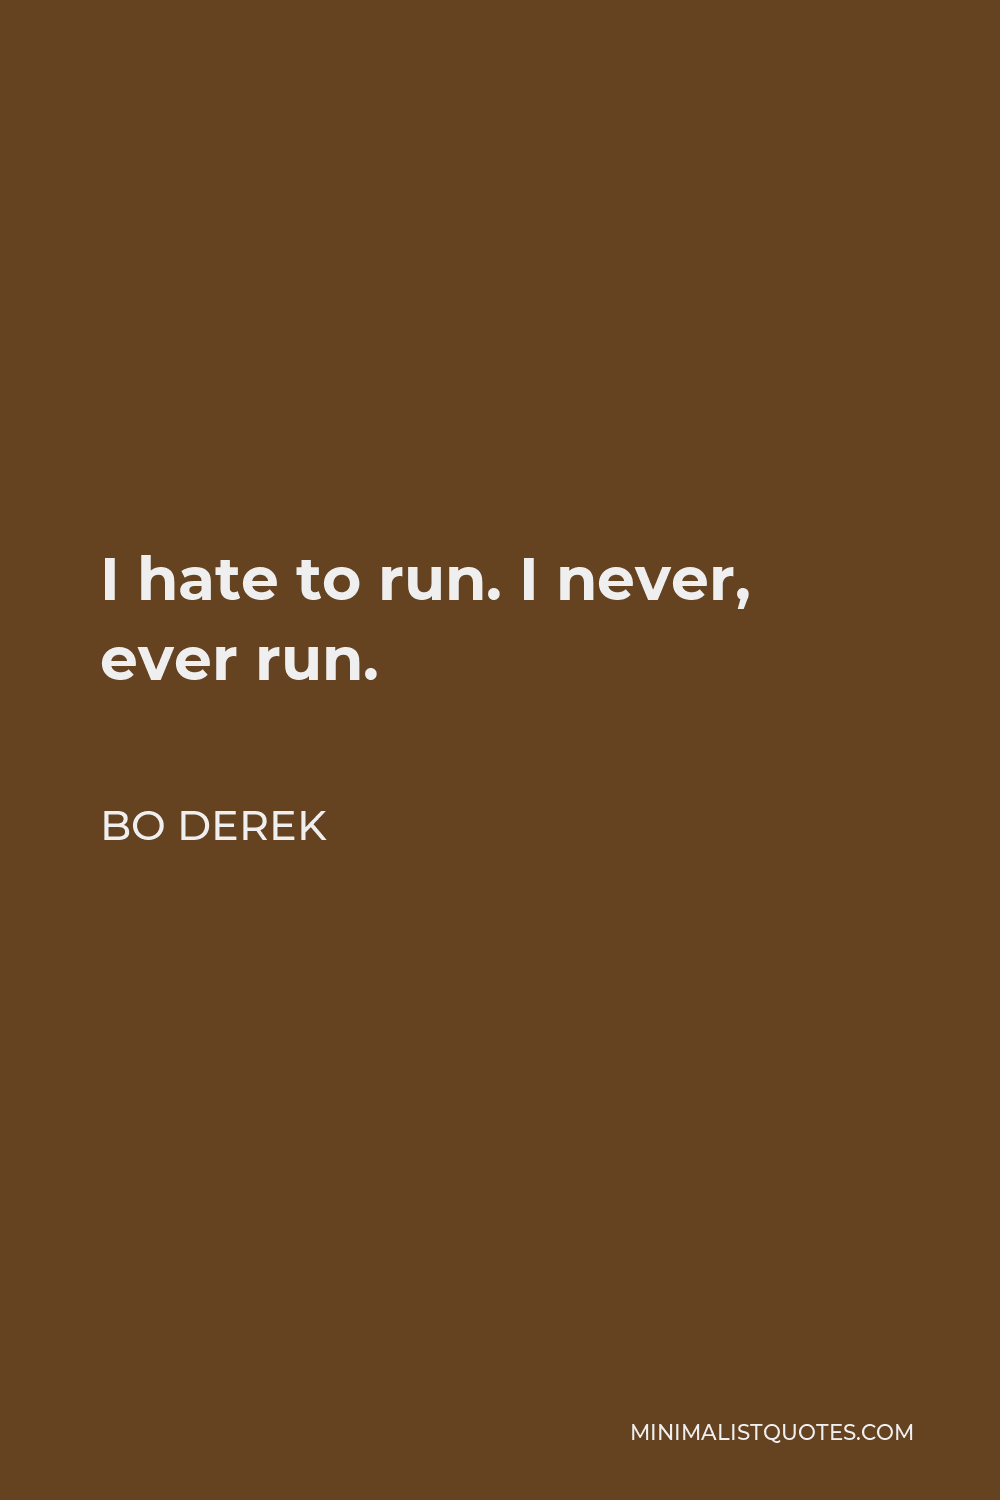 Bo Derek Quote - I hate to run. I never, ever run.